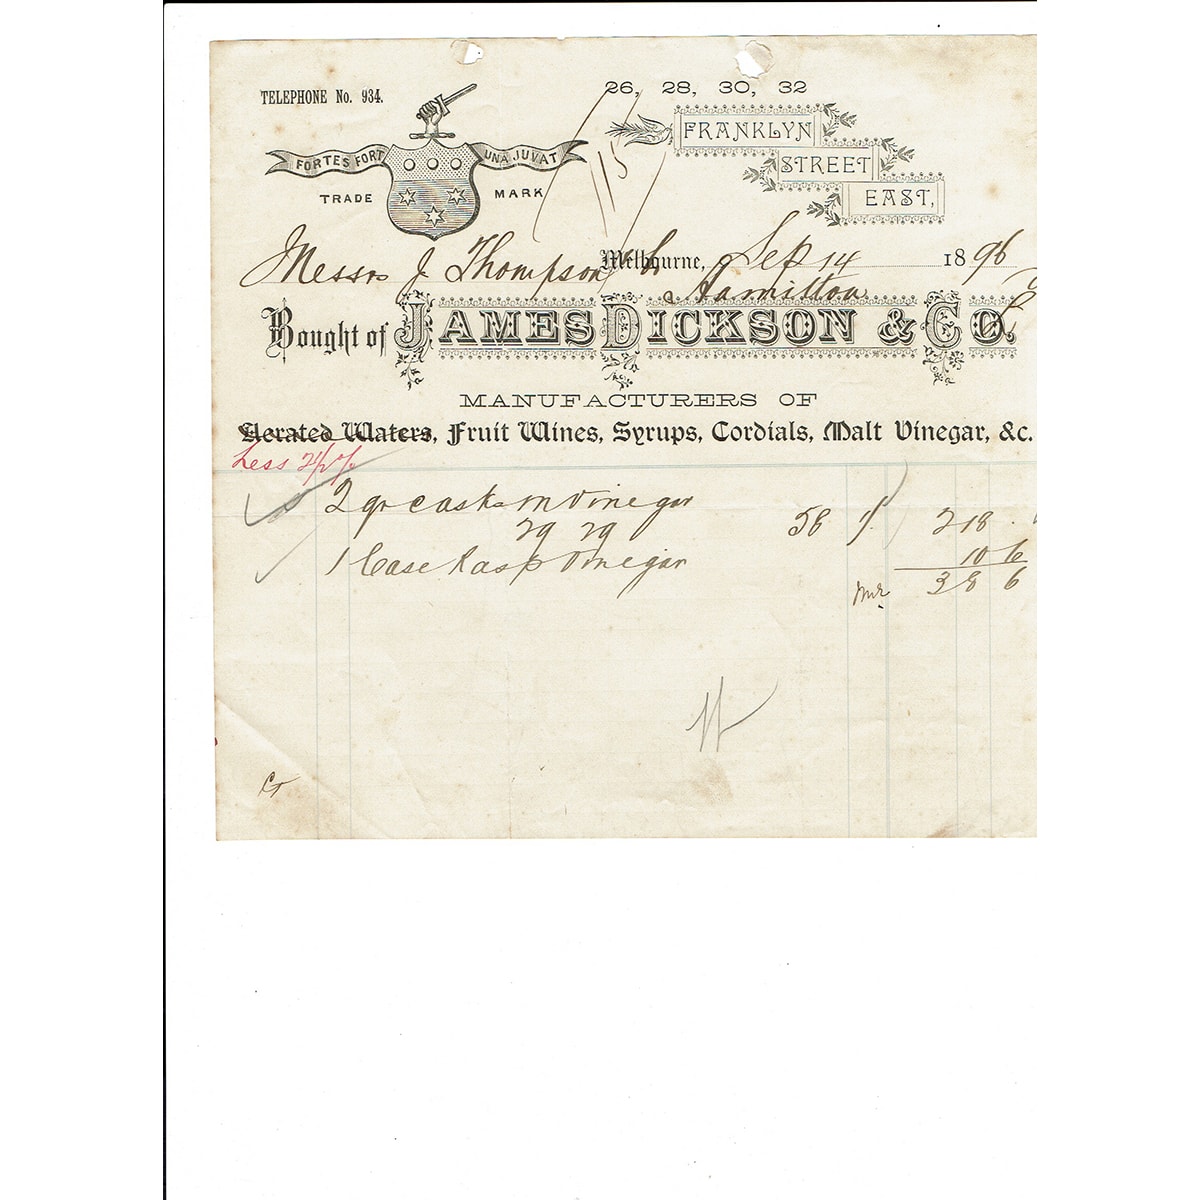 Invoice/Letterhead. James Dickson, Melbourne. 1896 (Victoria)